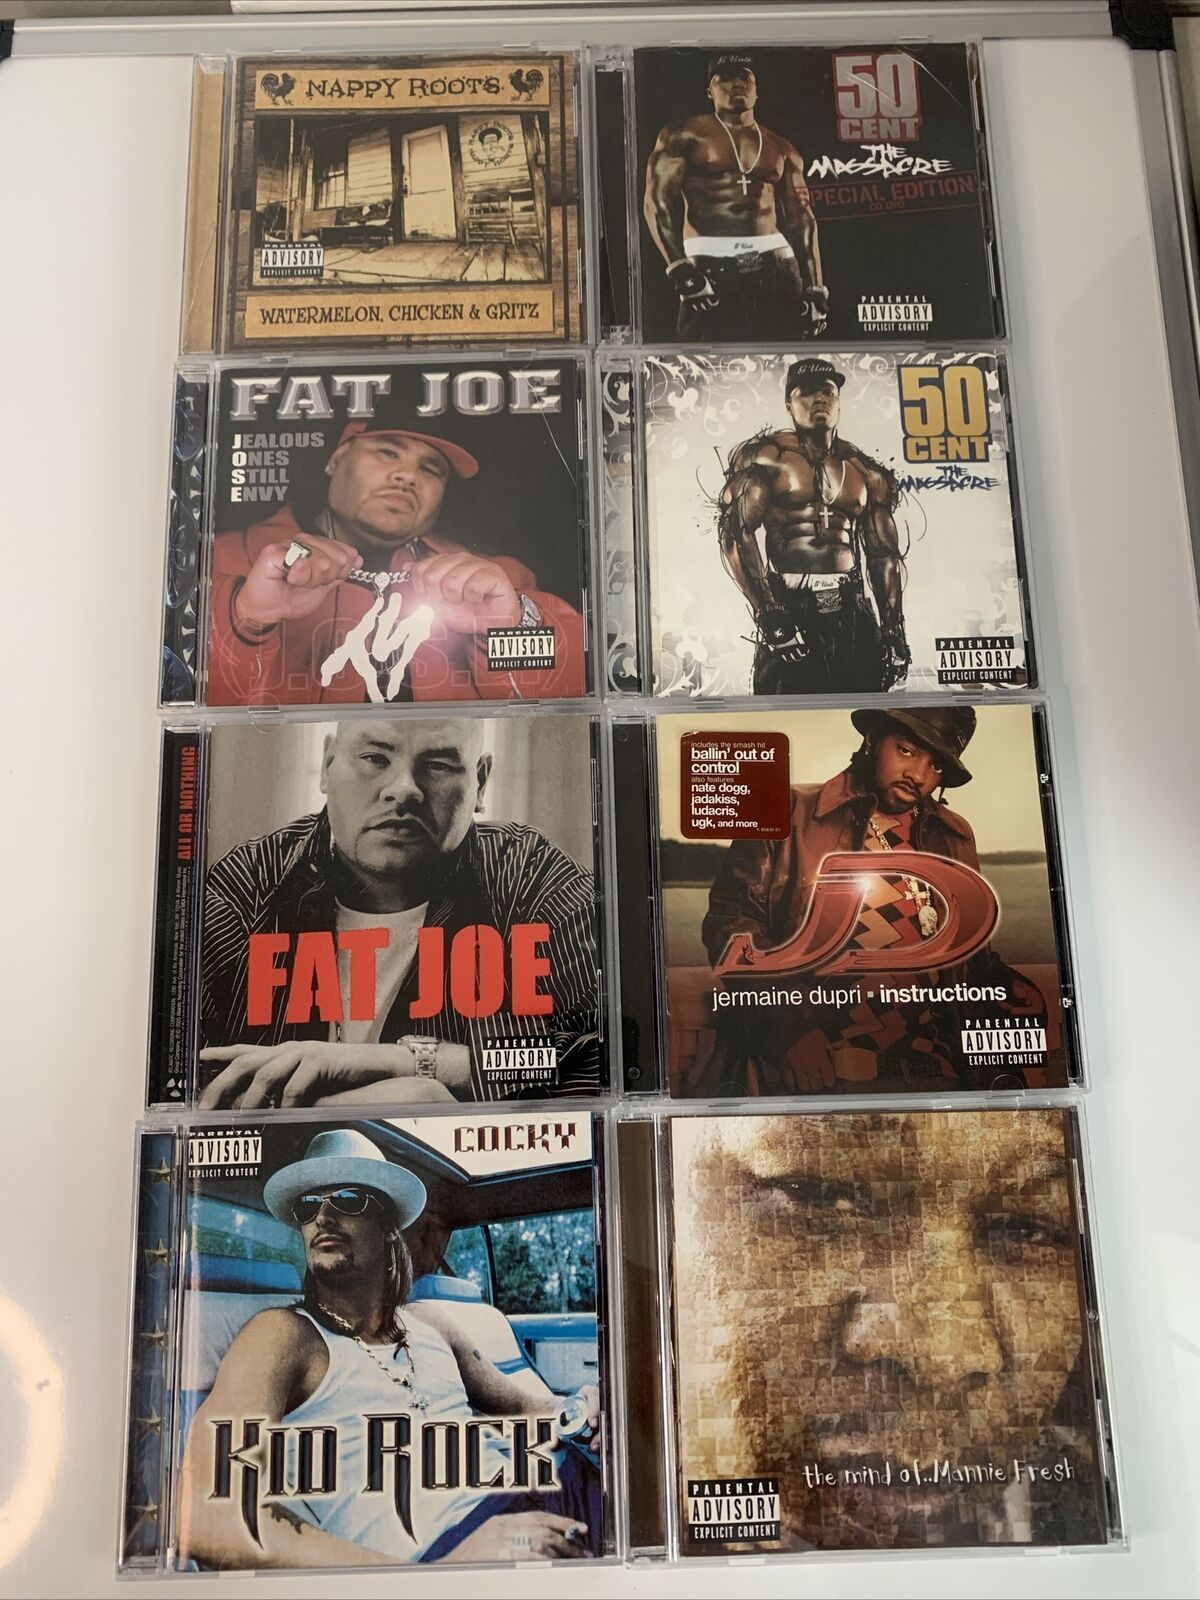 Fat Joe Kid Rock 50 Cent Nappy Roots Manny Fresh Jermaine Dupri Hip Hop Explicit